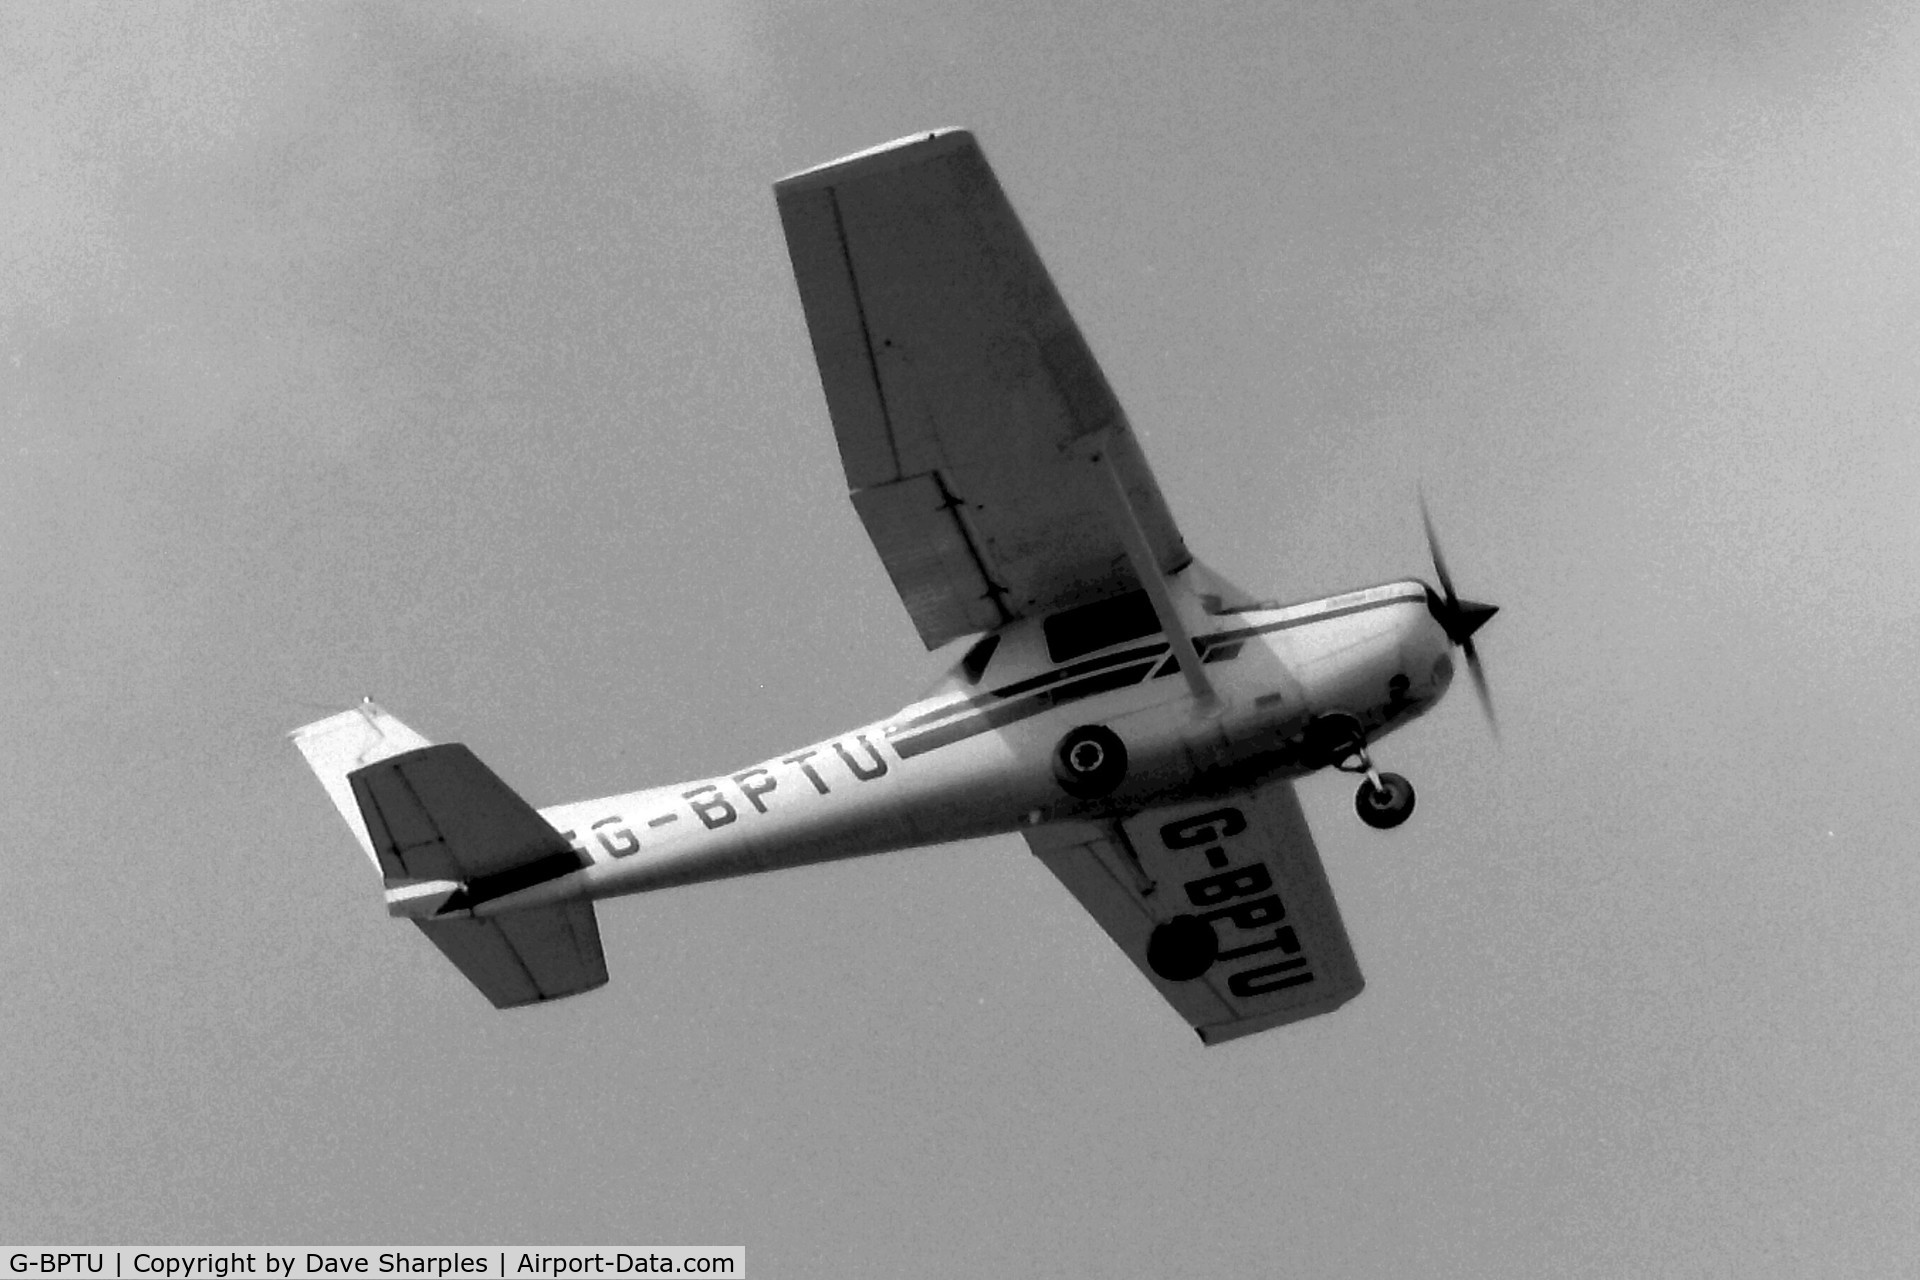 G-BPTU, 1979 Cessna 152 C/N 152-82955, Leavesden Aerodrome late 1980's